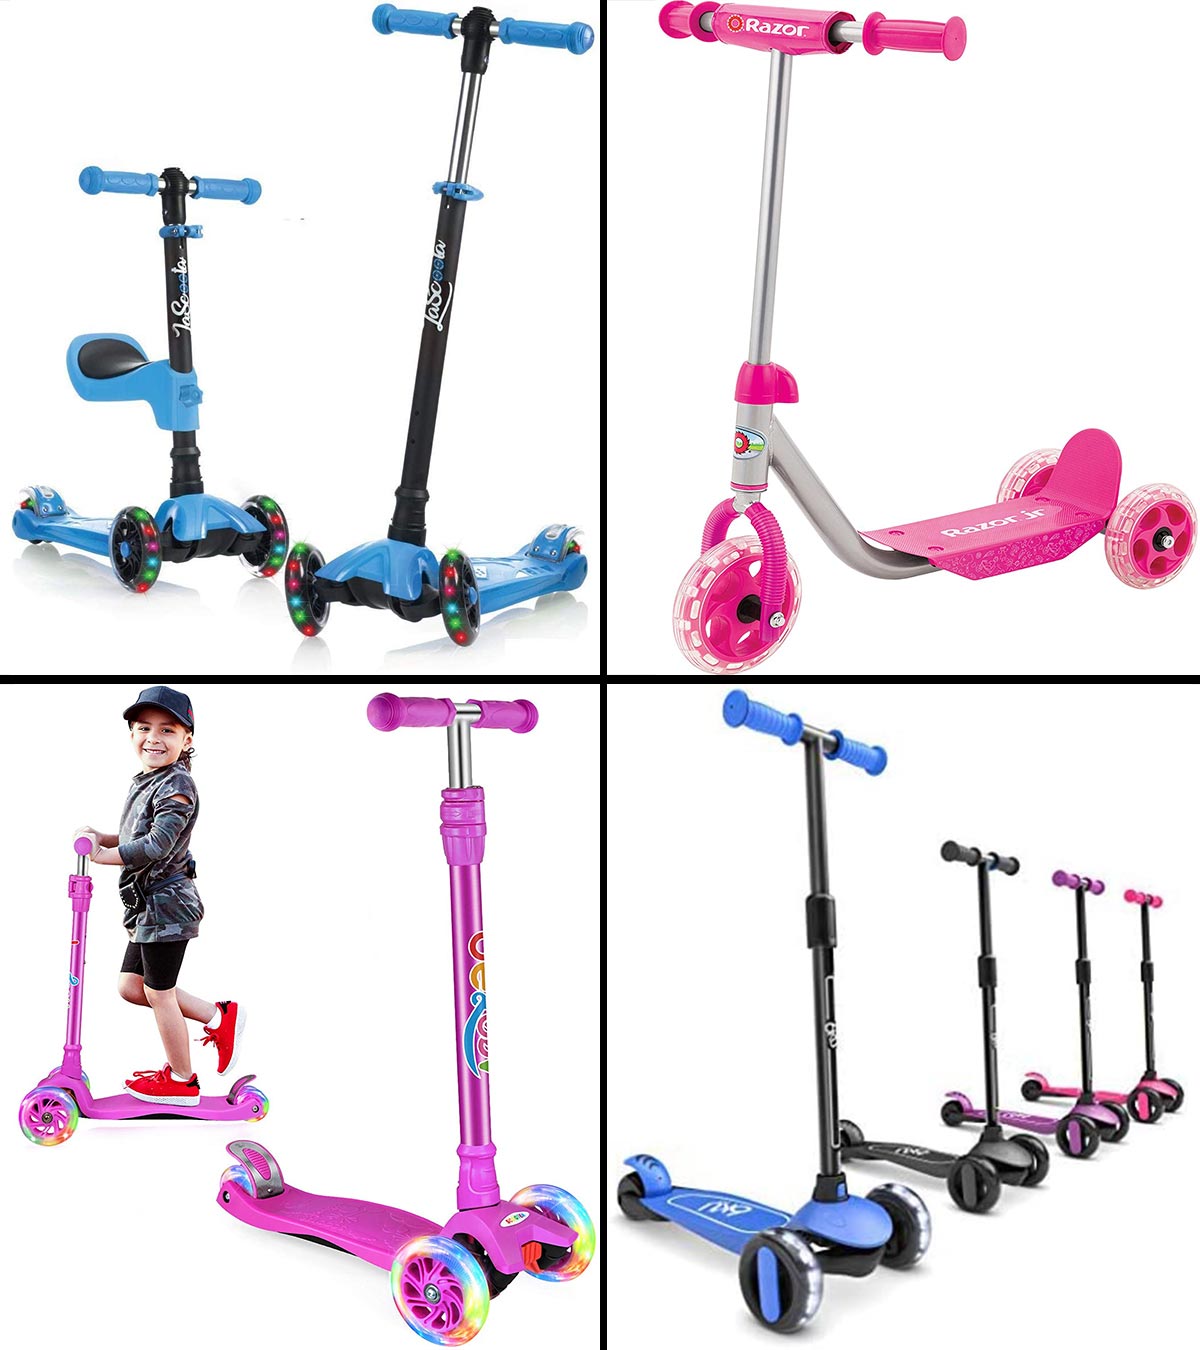 Micnaron Kick Scooter for Kids 3 Wheel Lean to Steer Adjustable Height 